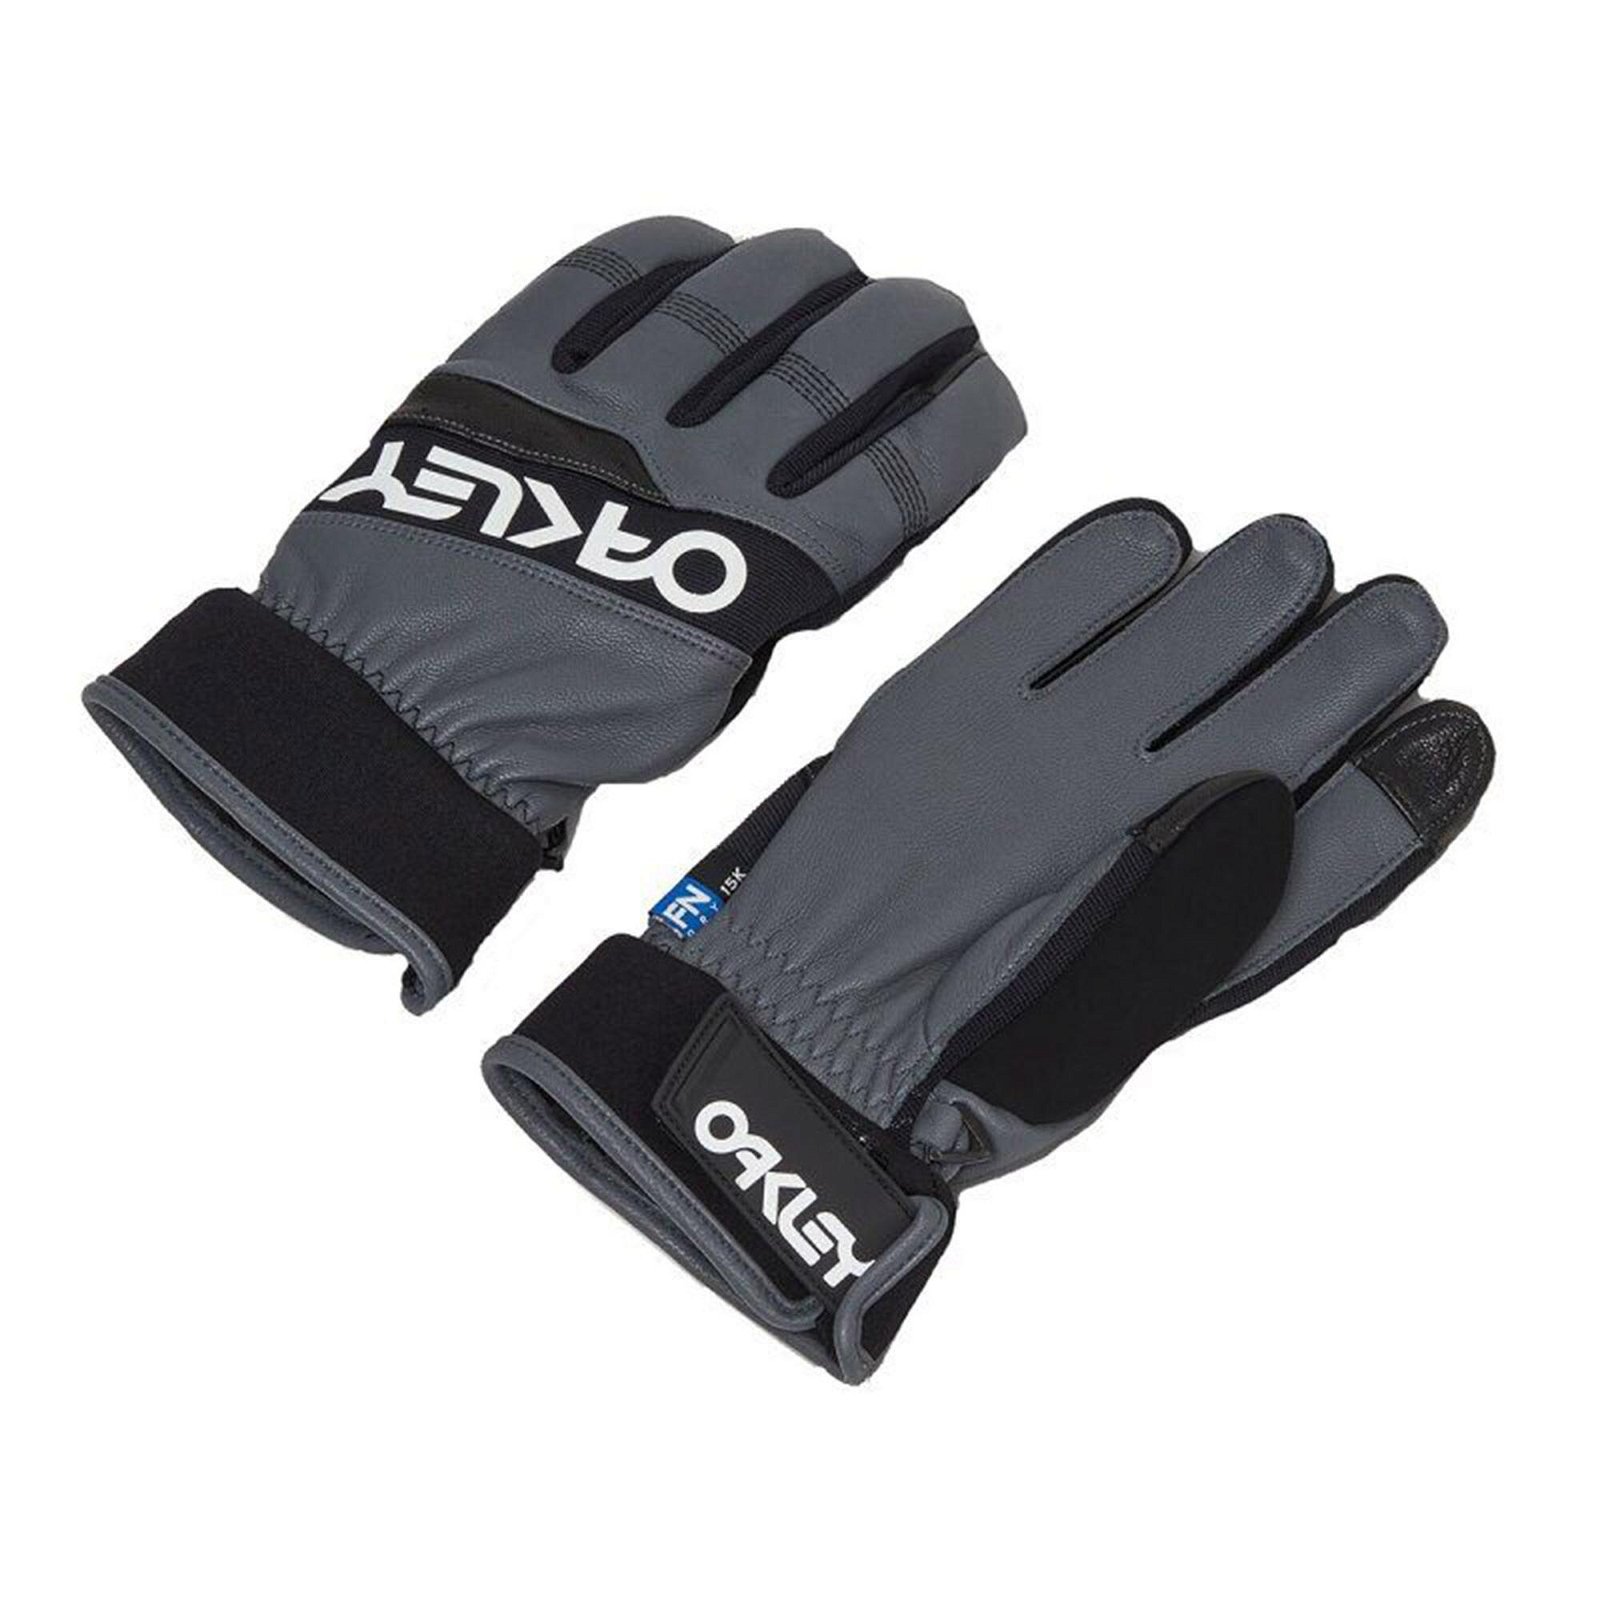 Qakley Factory Winter Gloves 2.0 Erkek Eldiven